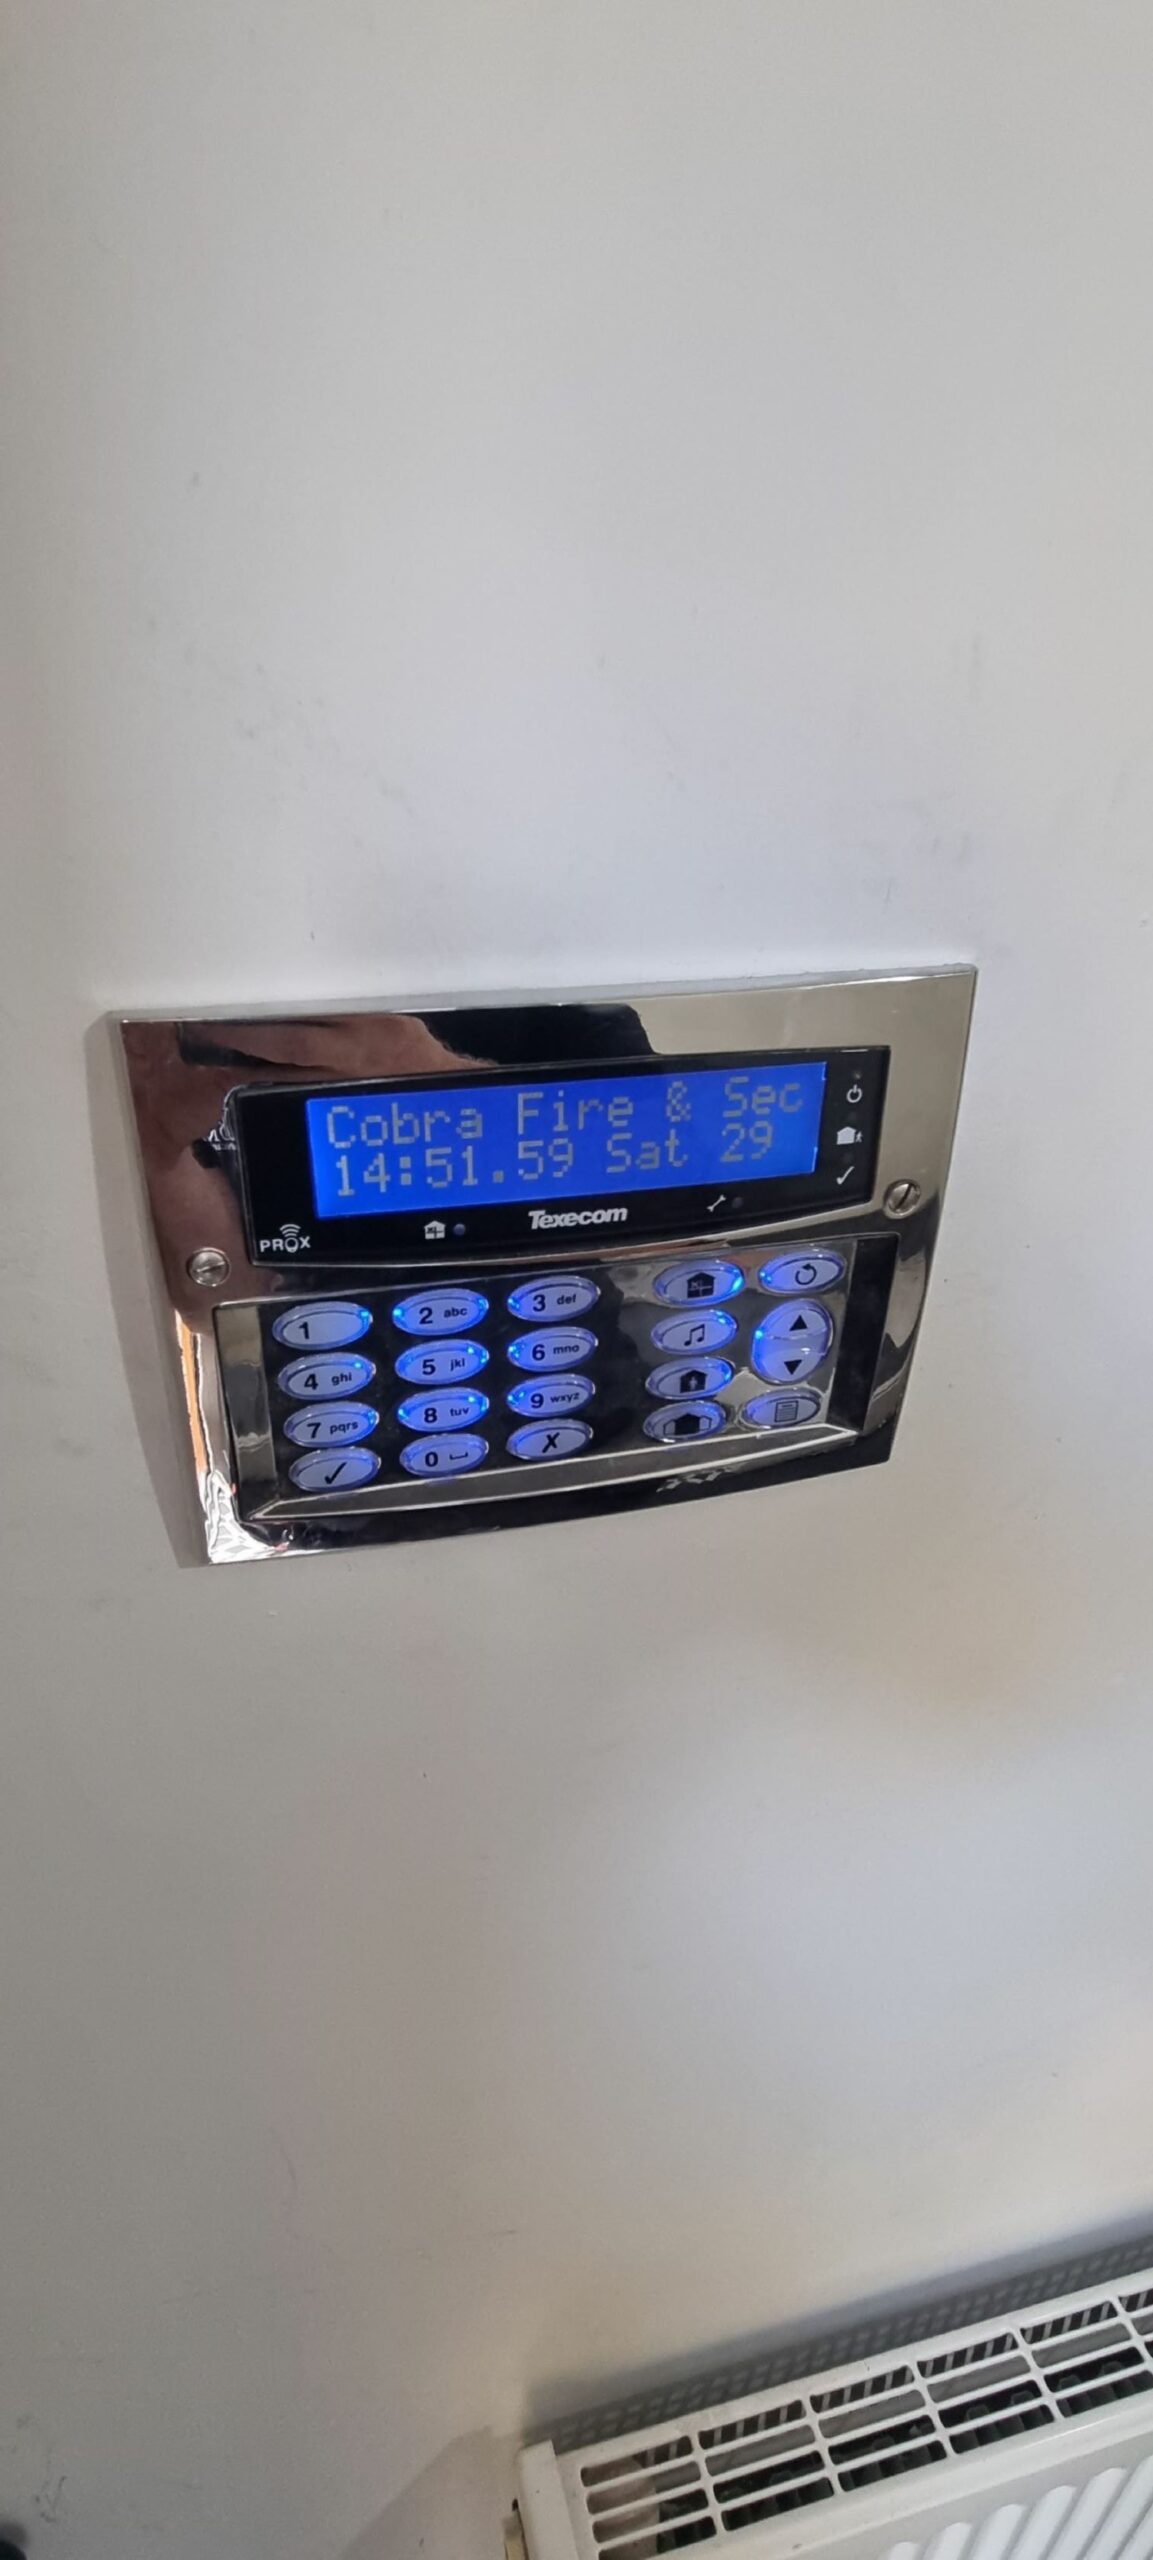 Intruder Alarm keypad installed on a wall